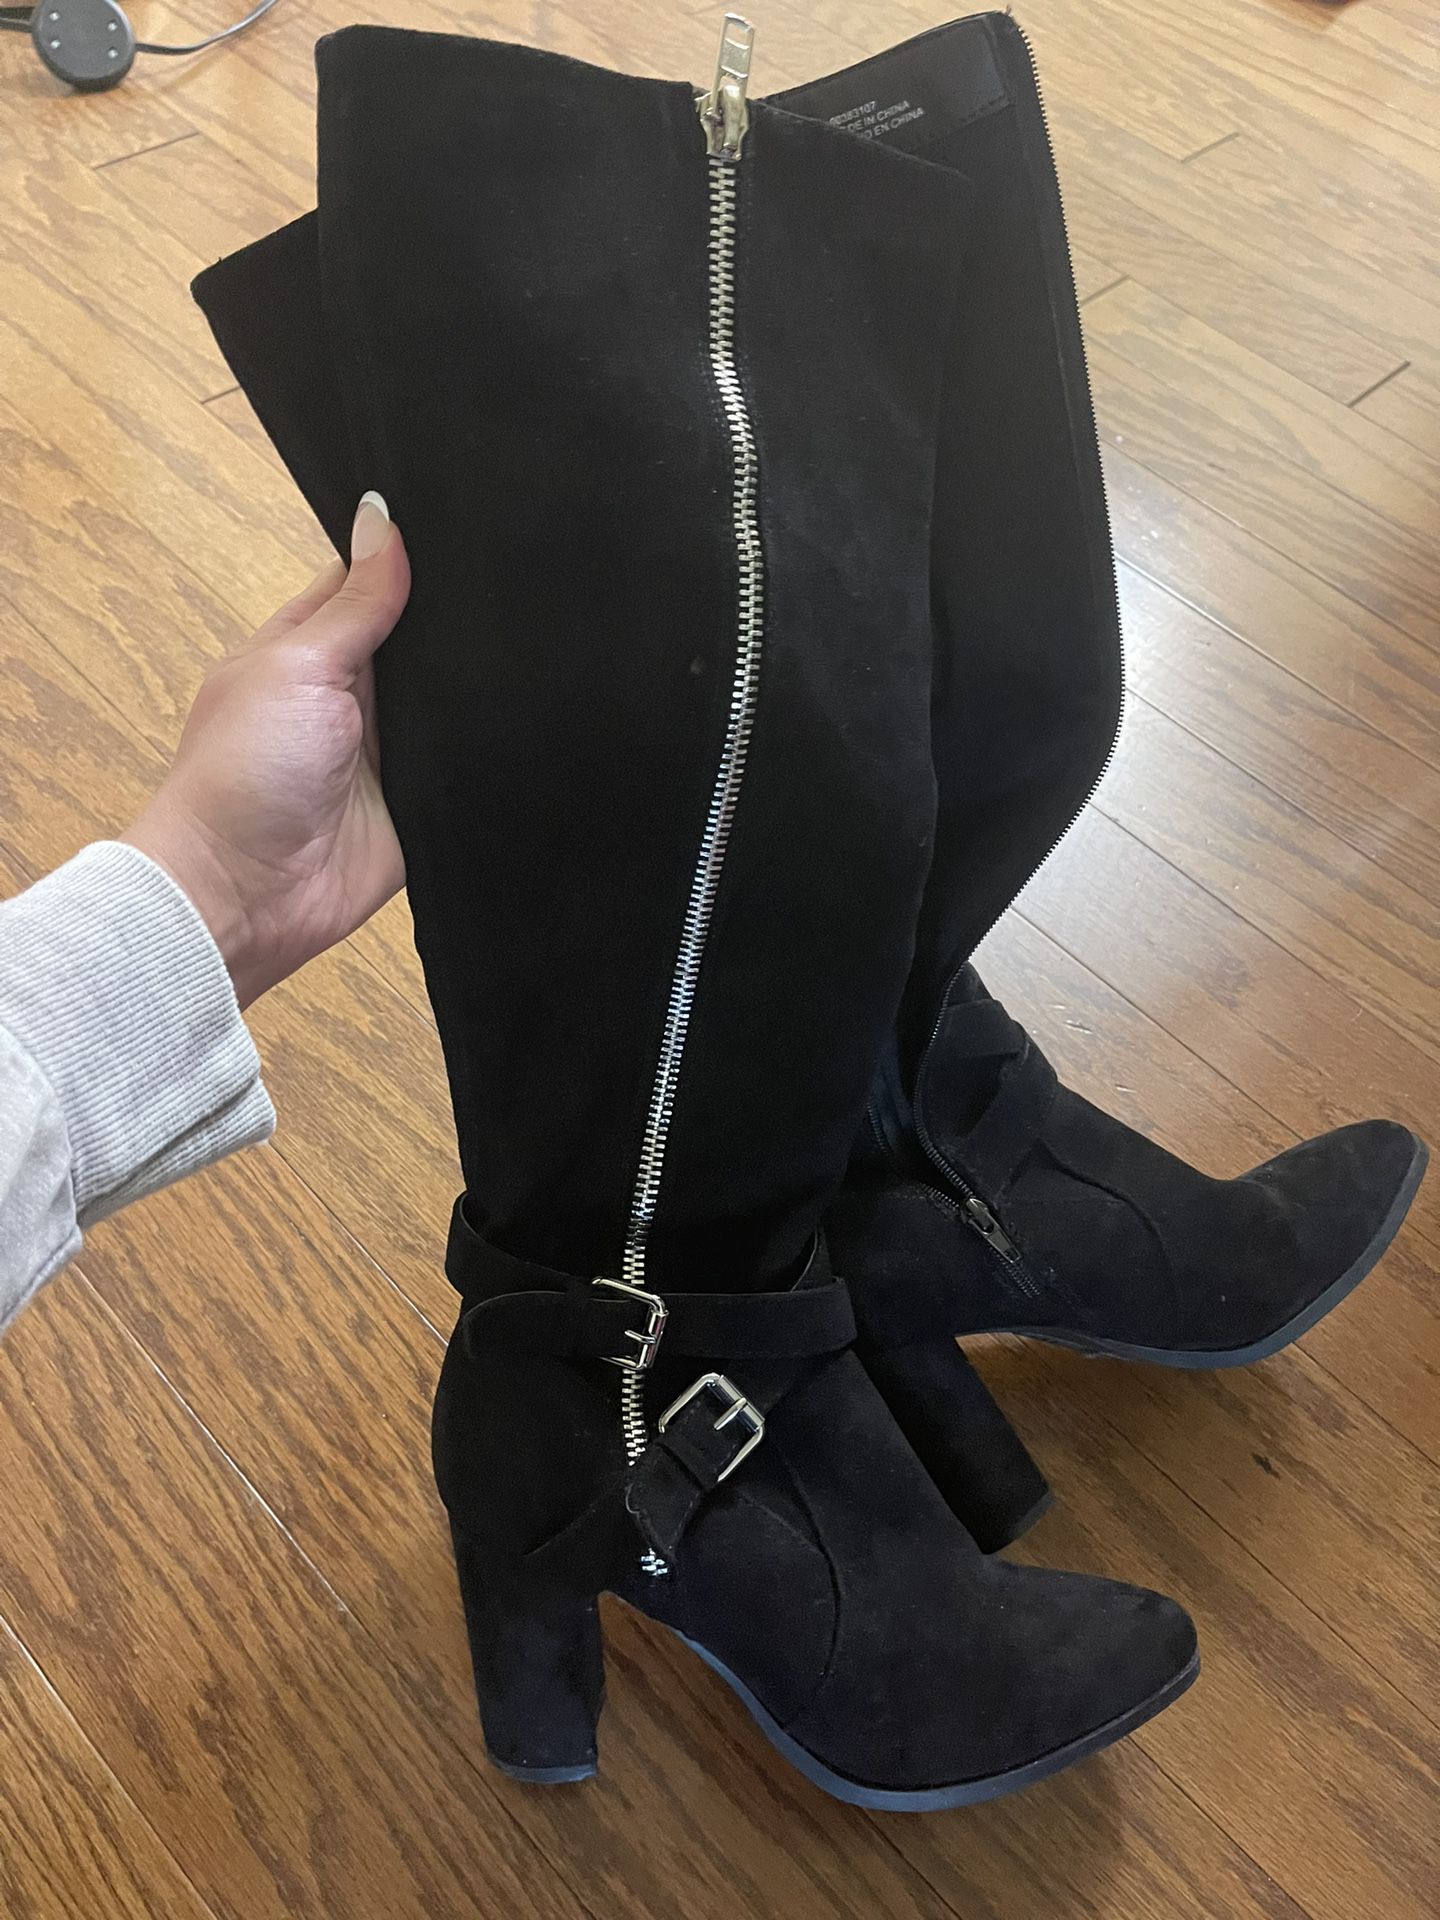 Boot/heels For Sale